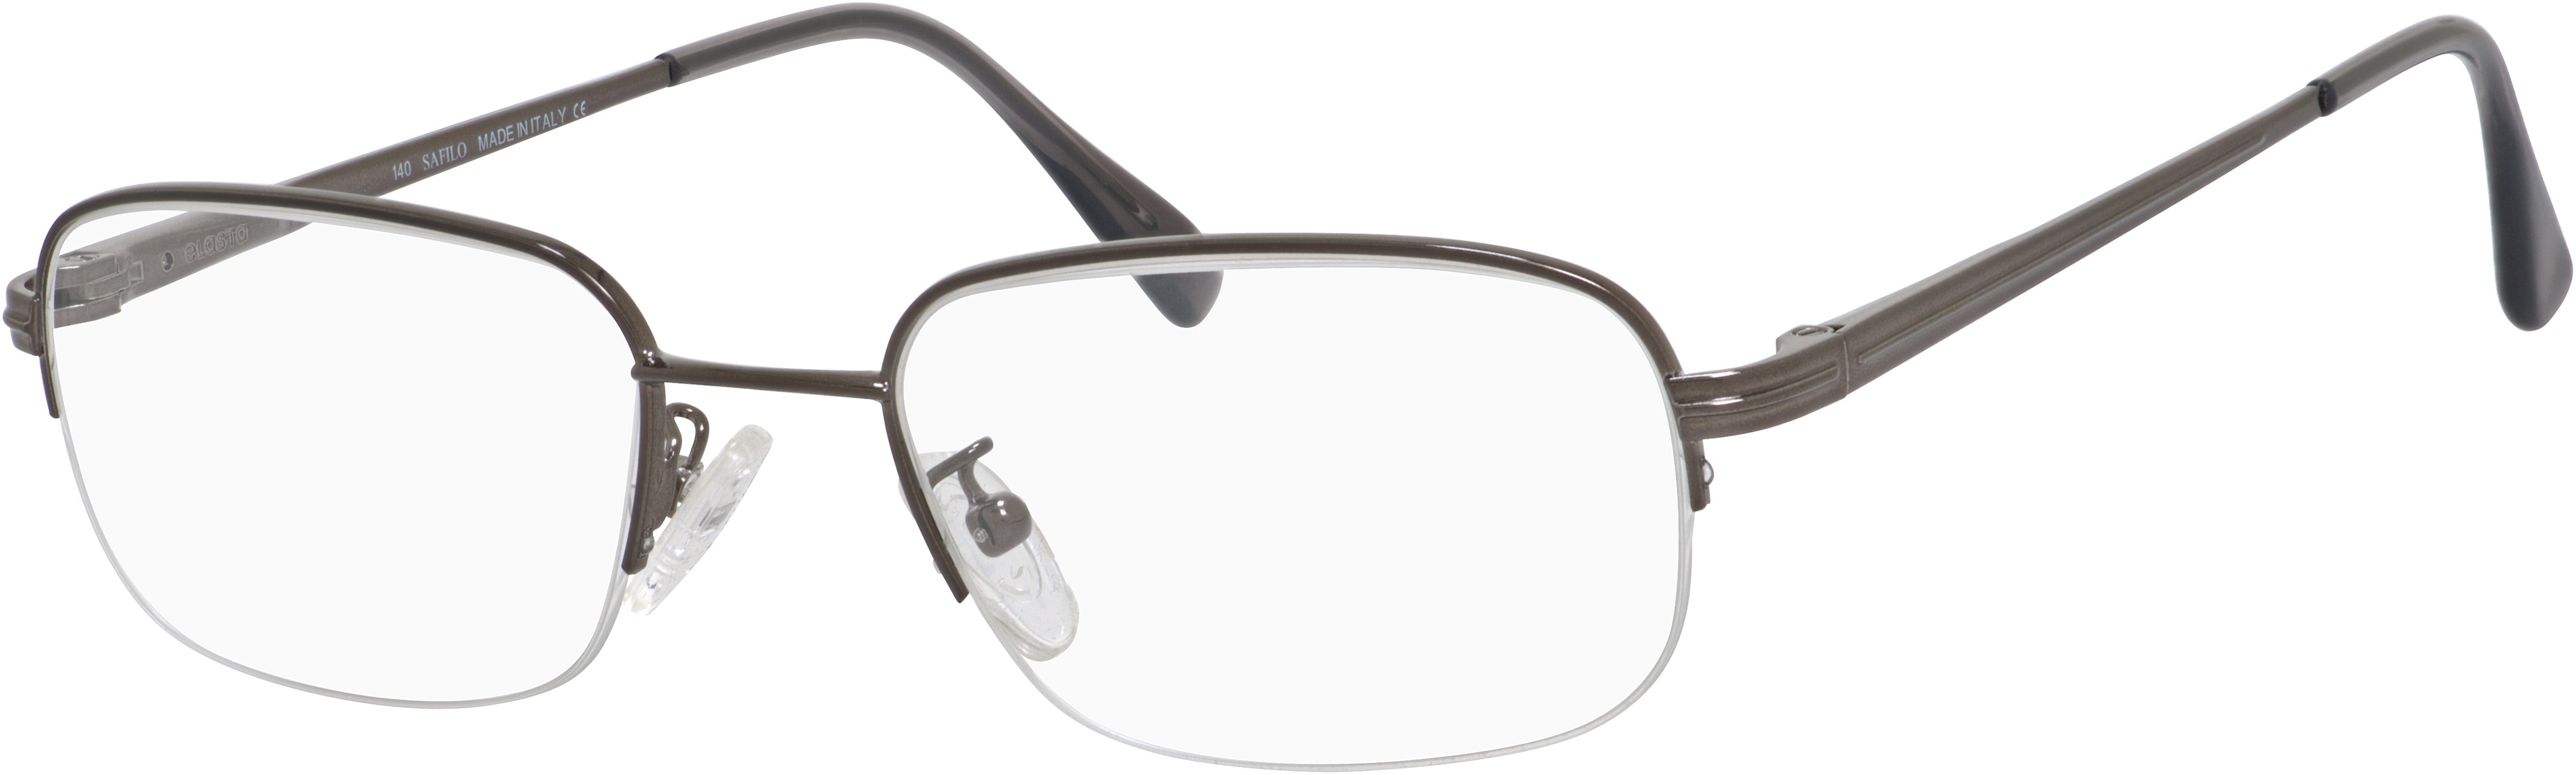  Elasta 7103 Rectangular Eyeglasses 02HH-02HH  Bakelite (00 Demo Lens)